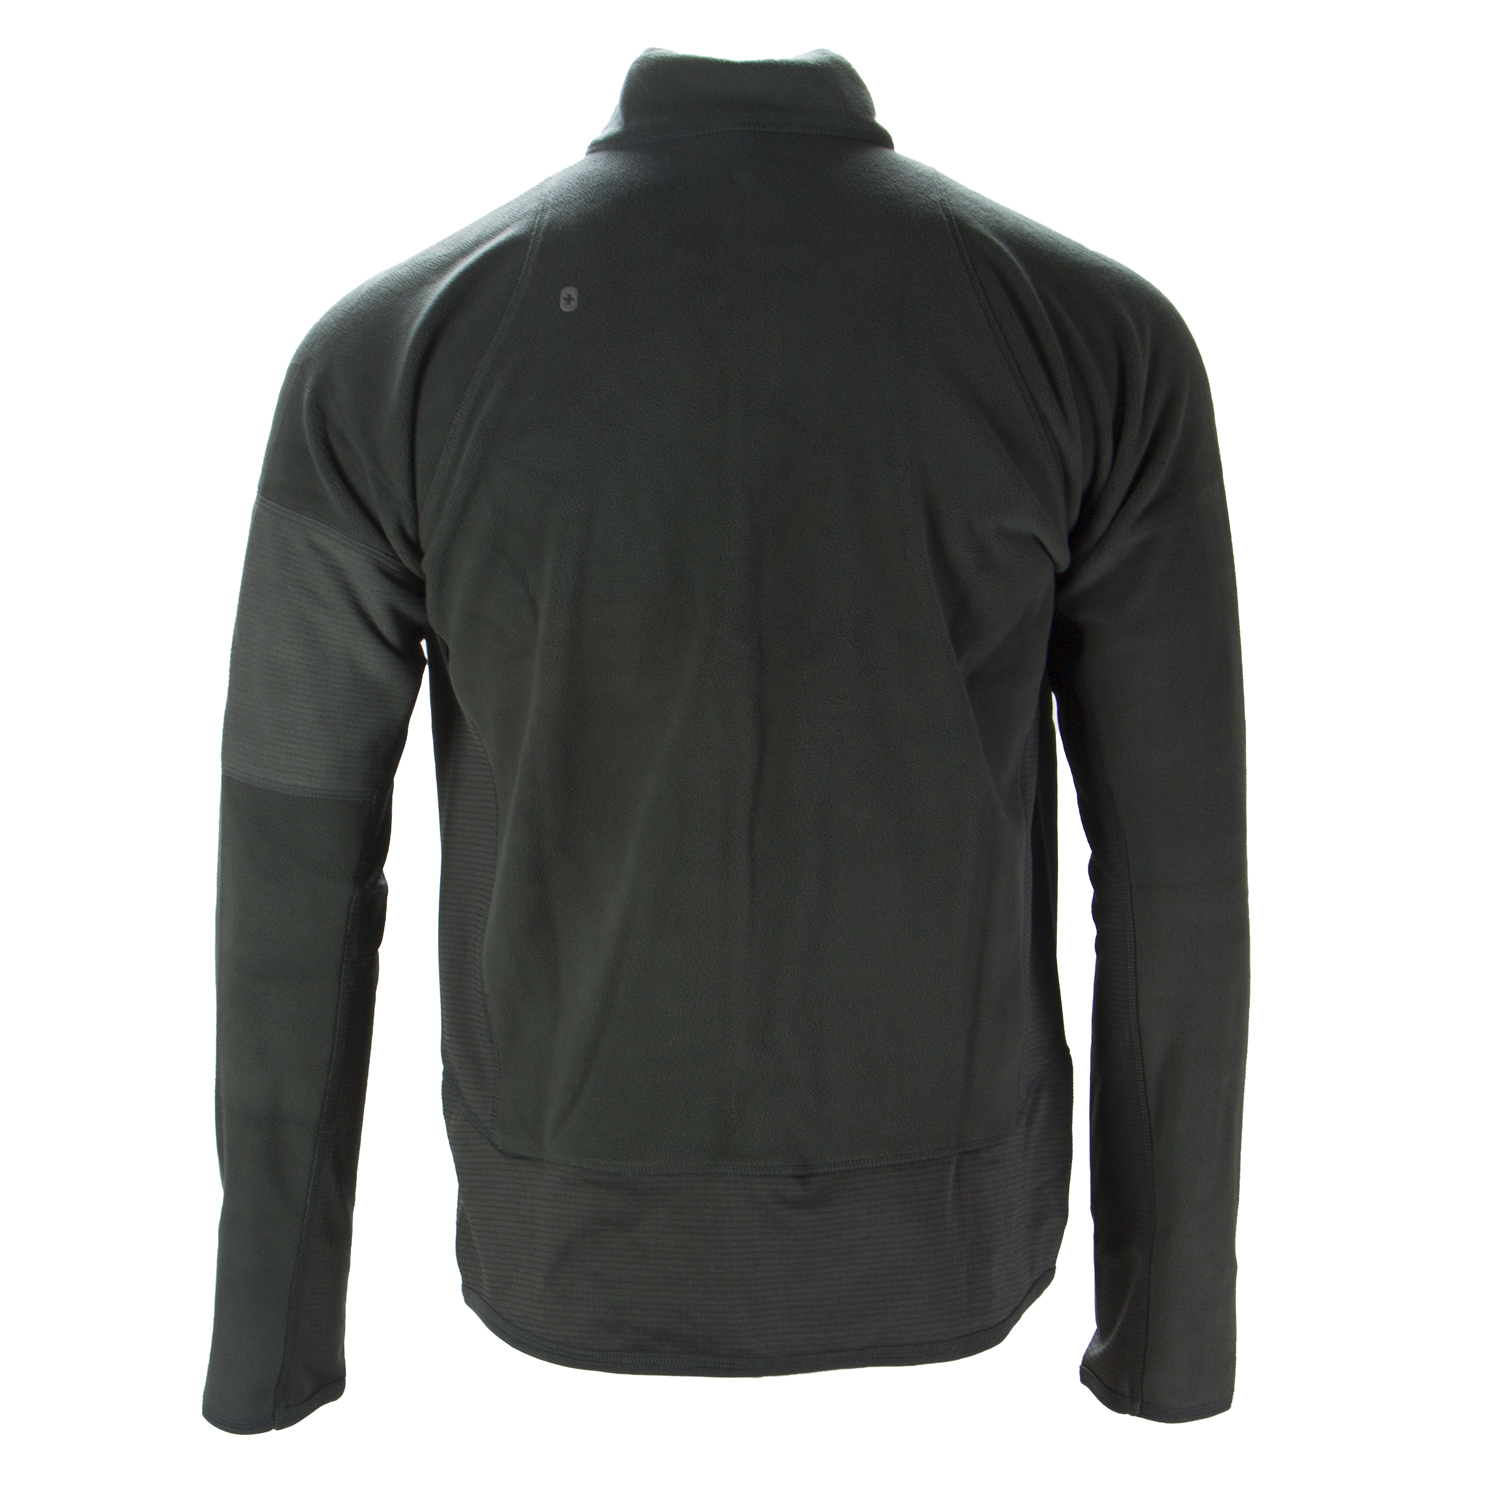 FIGS Men's Lifestyle Fleece Jacket LJM1700 $88 NWT | eBay